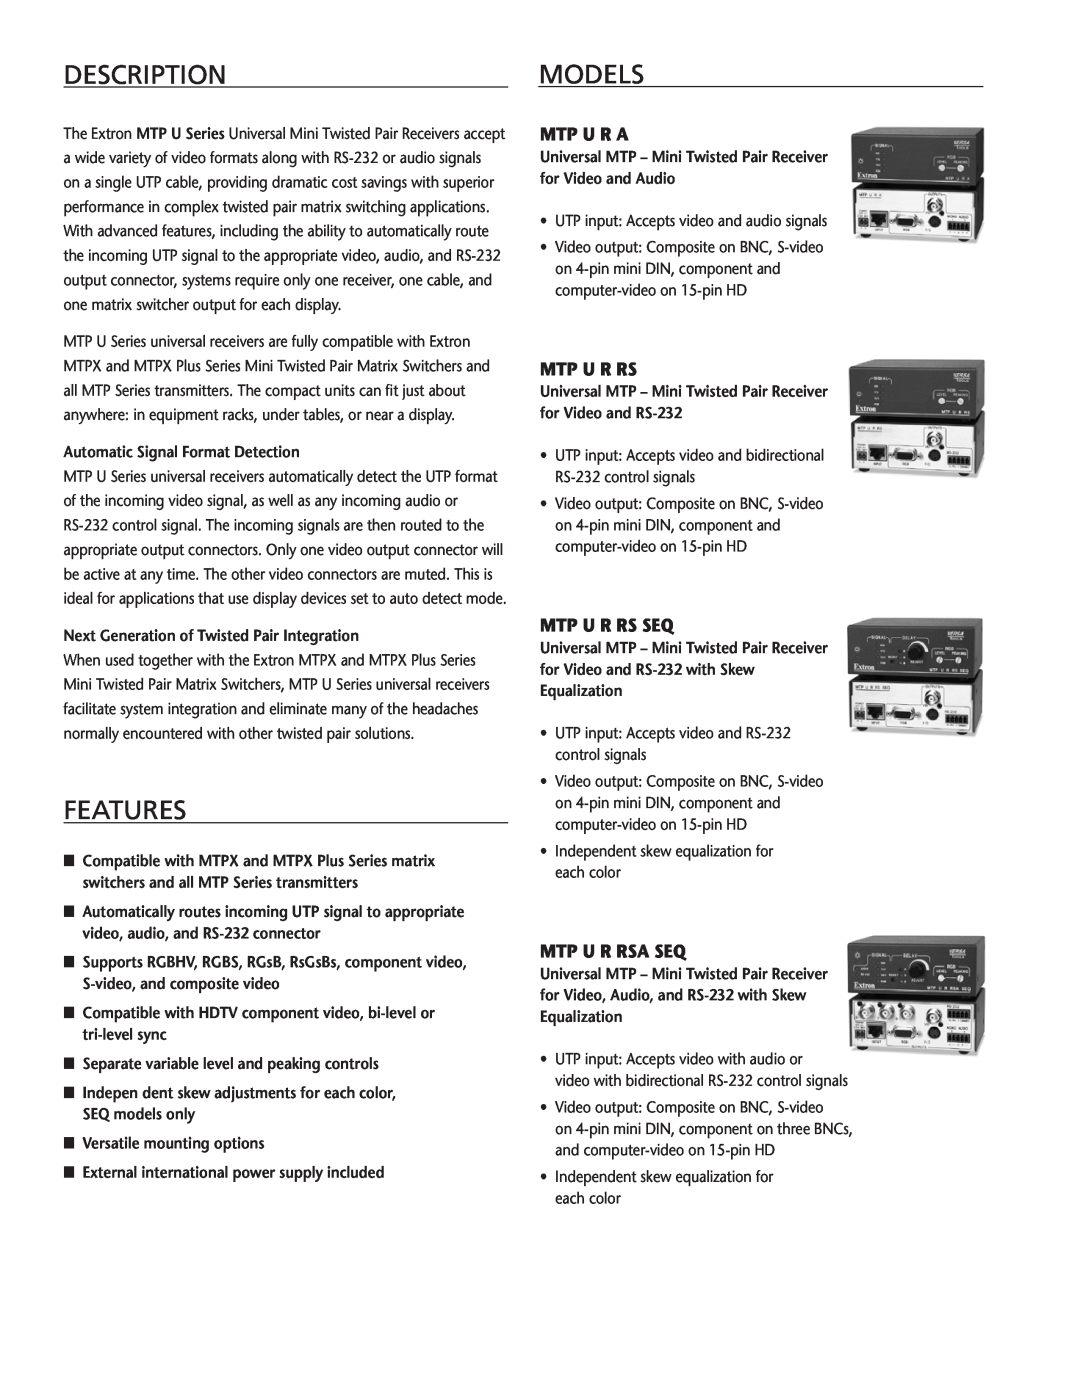 Extron electronic MTP U Series manual Description, Features, MODels, Mtp U R A, Mtp U R Rs Seq, Mtp U R Rsa Seq 